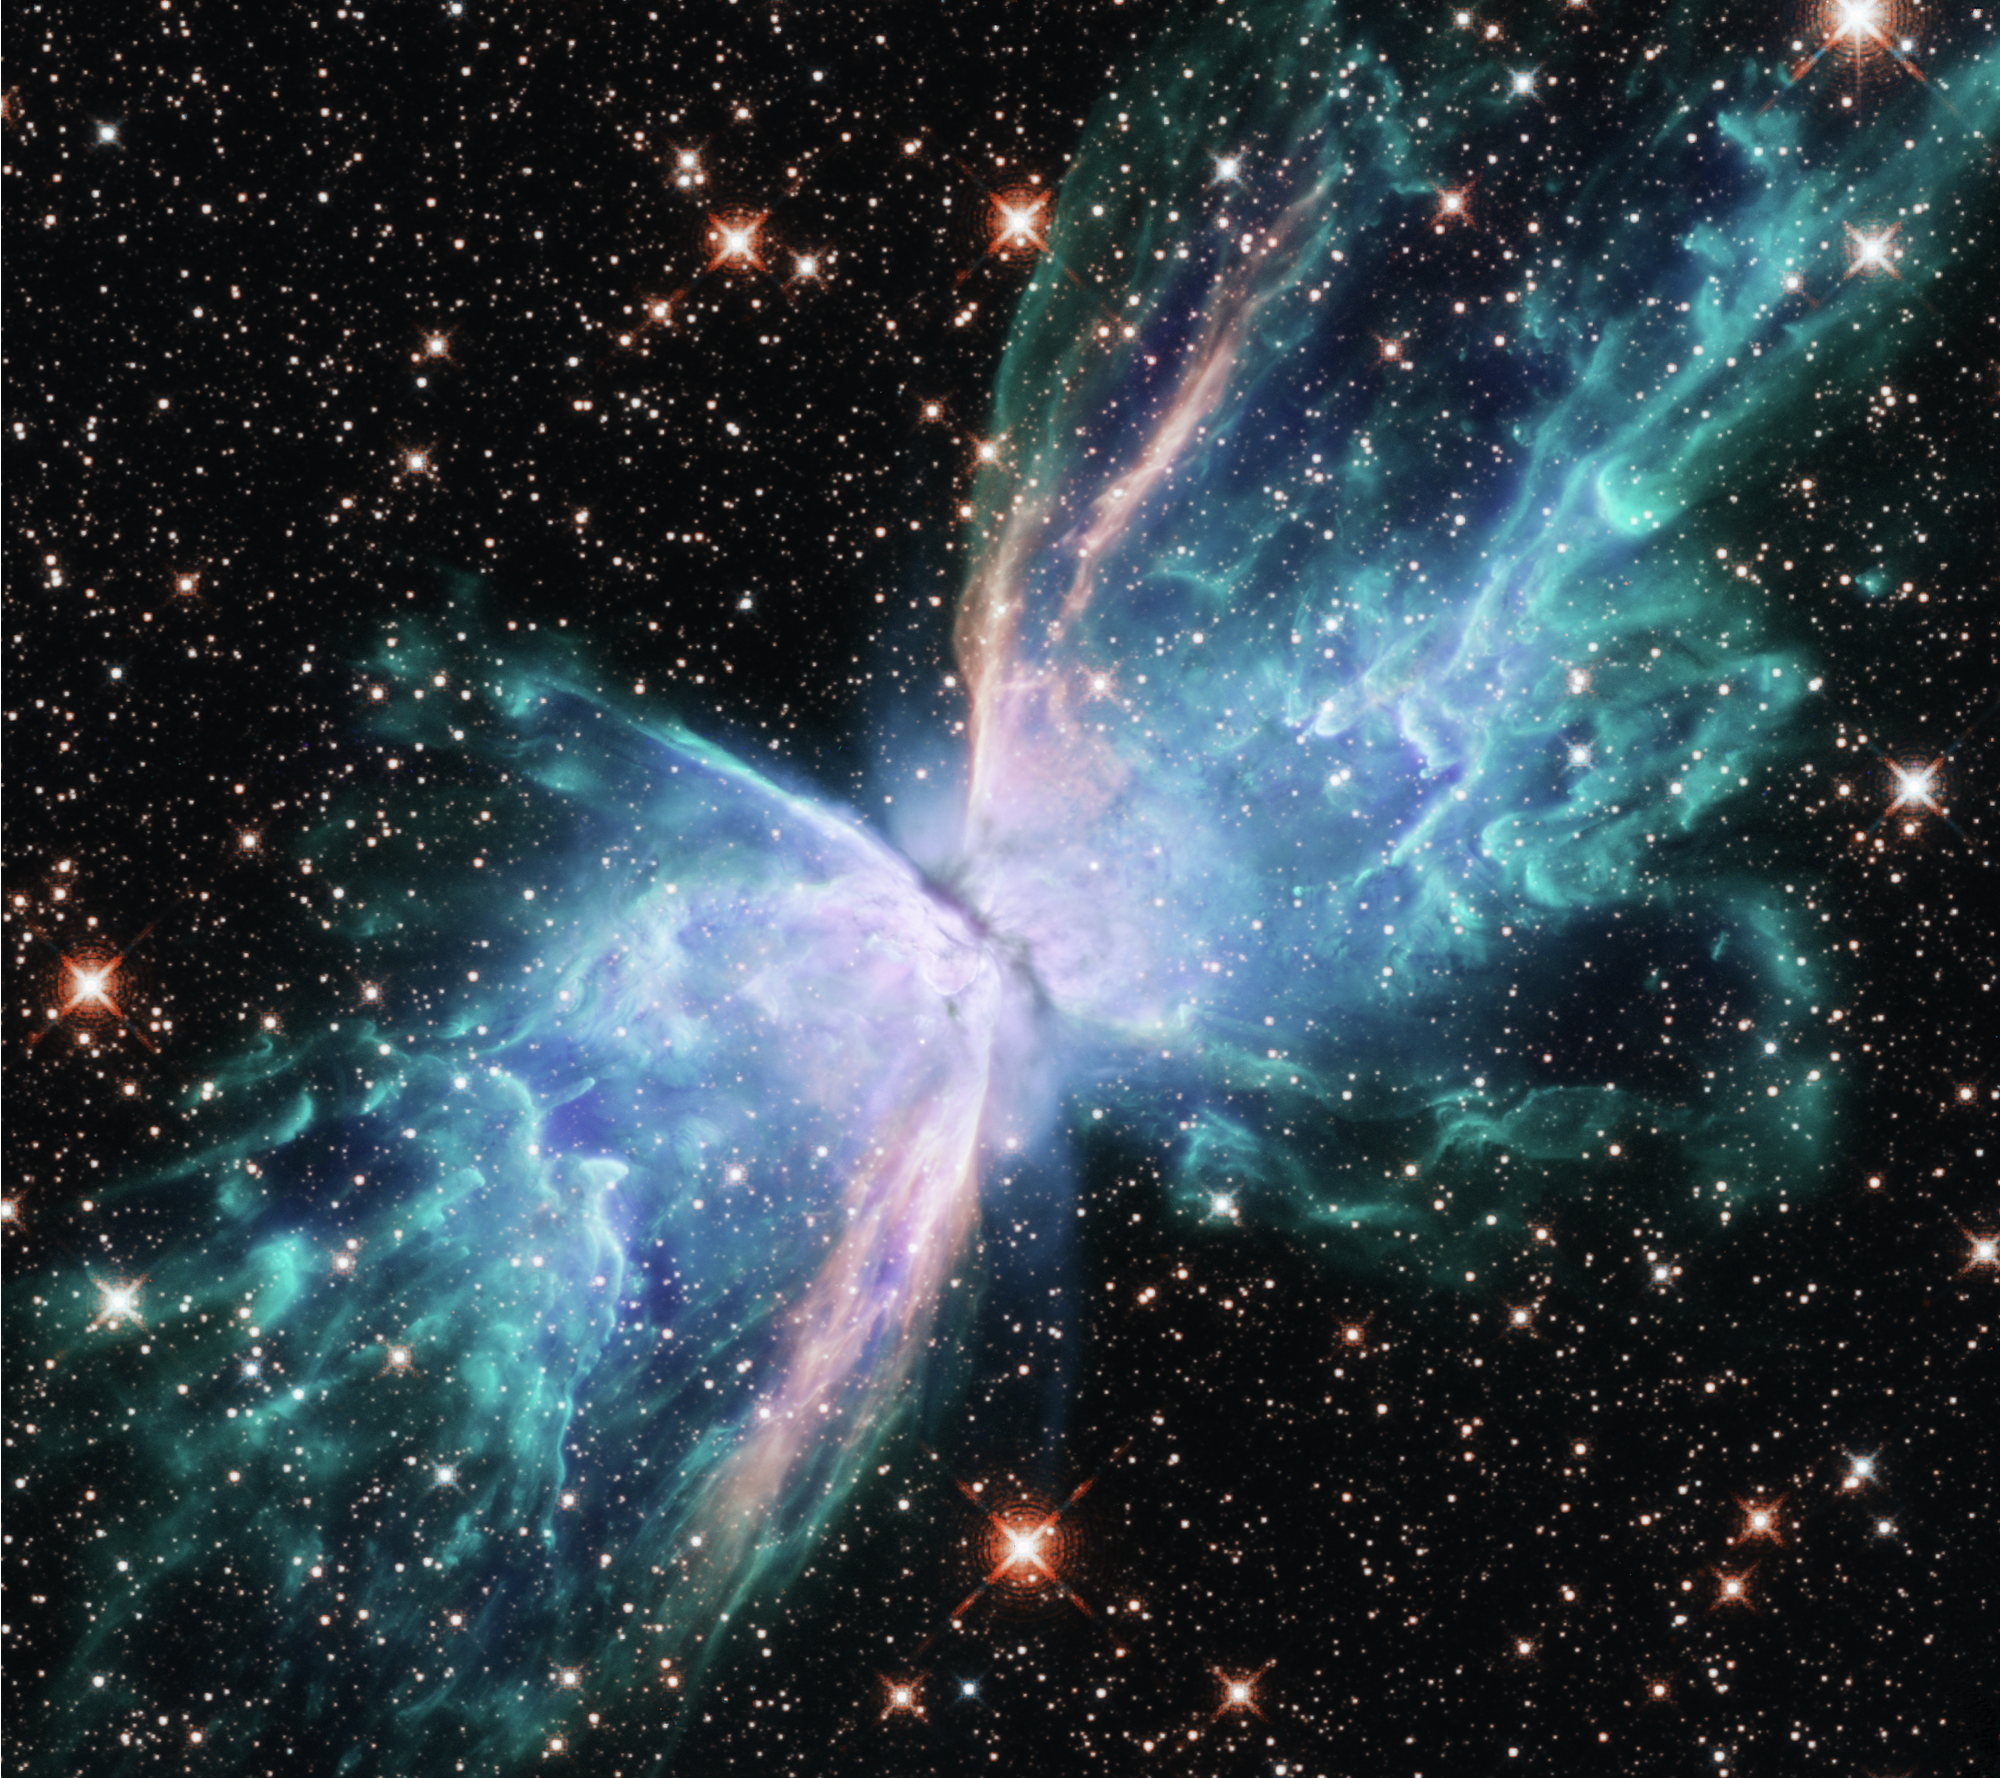 Hubble image of Butterfly Nebula